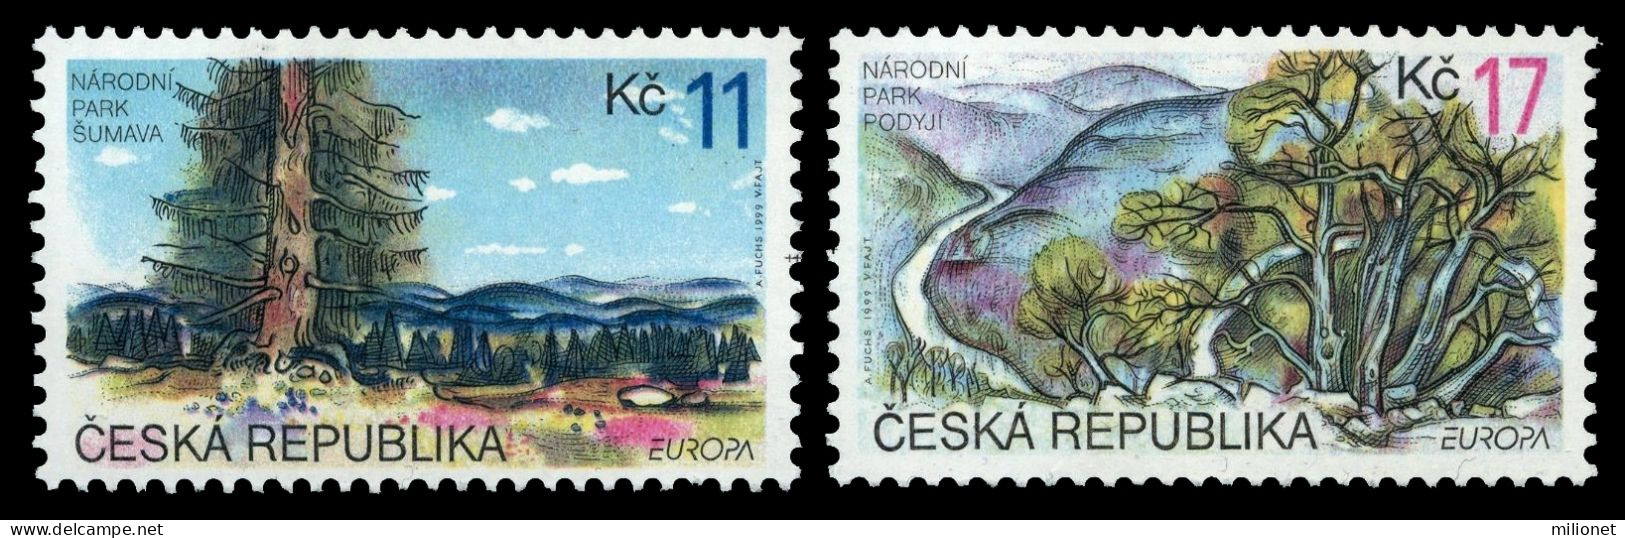 SALE! CZECH REPUBLIC REP. CHECA CHEQUIA RÉP. TCHÈQUE TSCHECHISCHE 1999 EUROPA CEPT National Reserves & Parks 2 Stamps ** - 1999